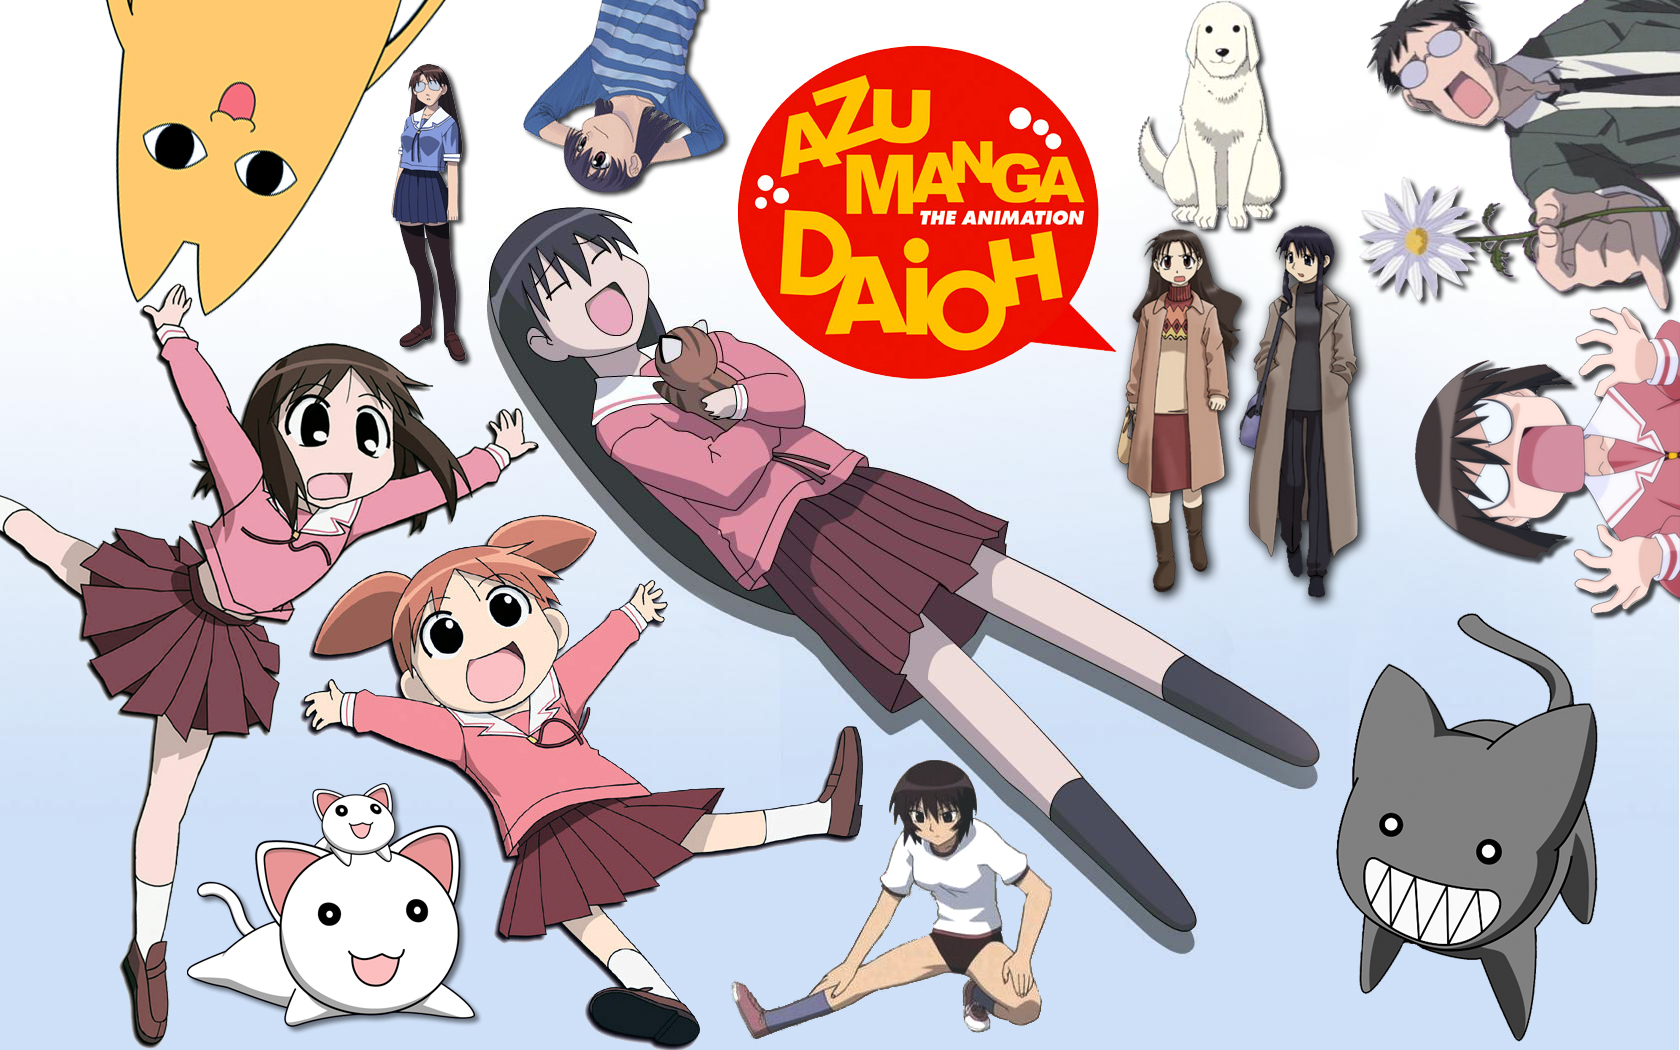 Anime desktop wallpaper featuring Azumanga Daioh characters.